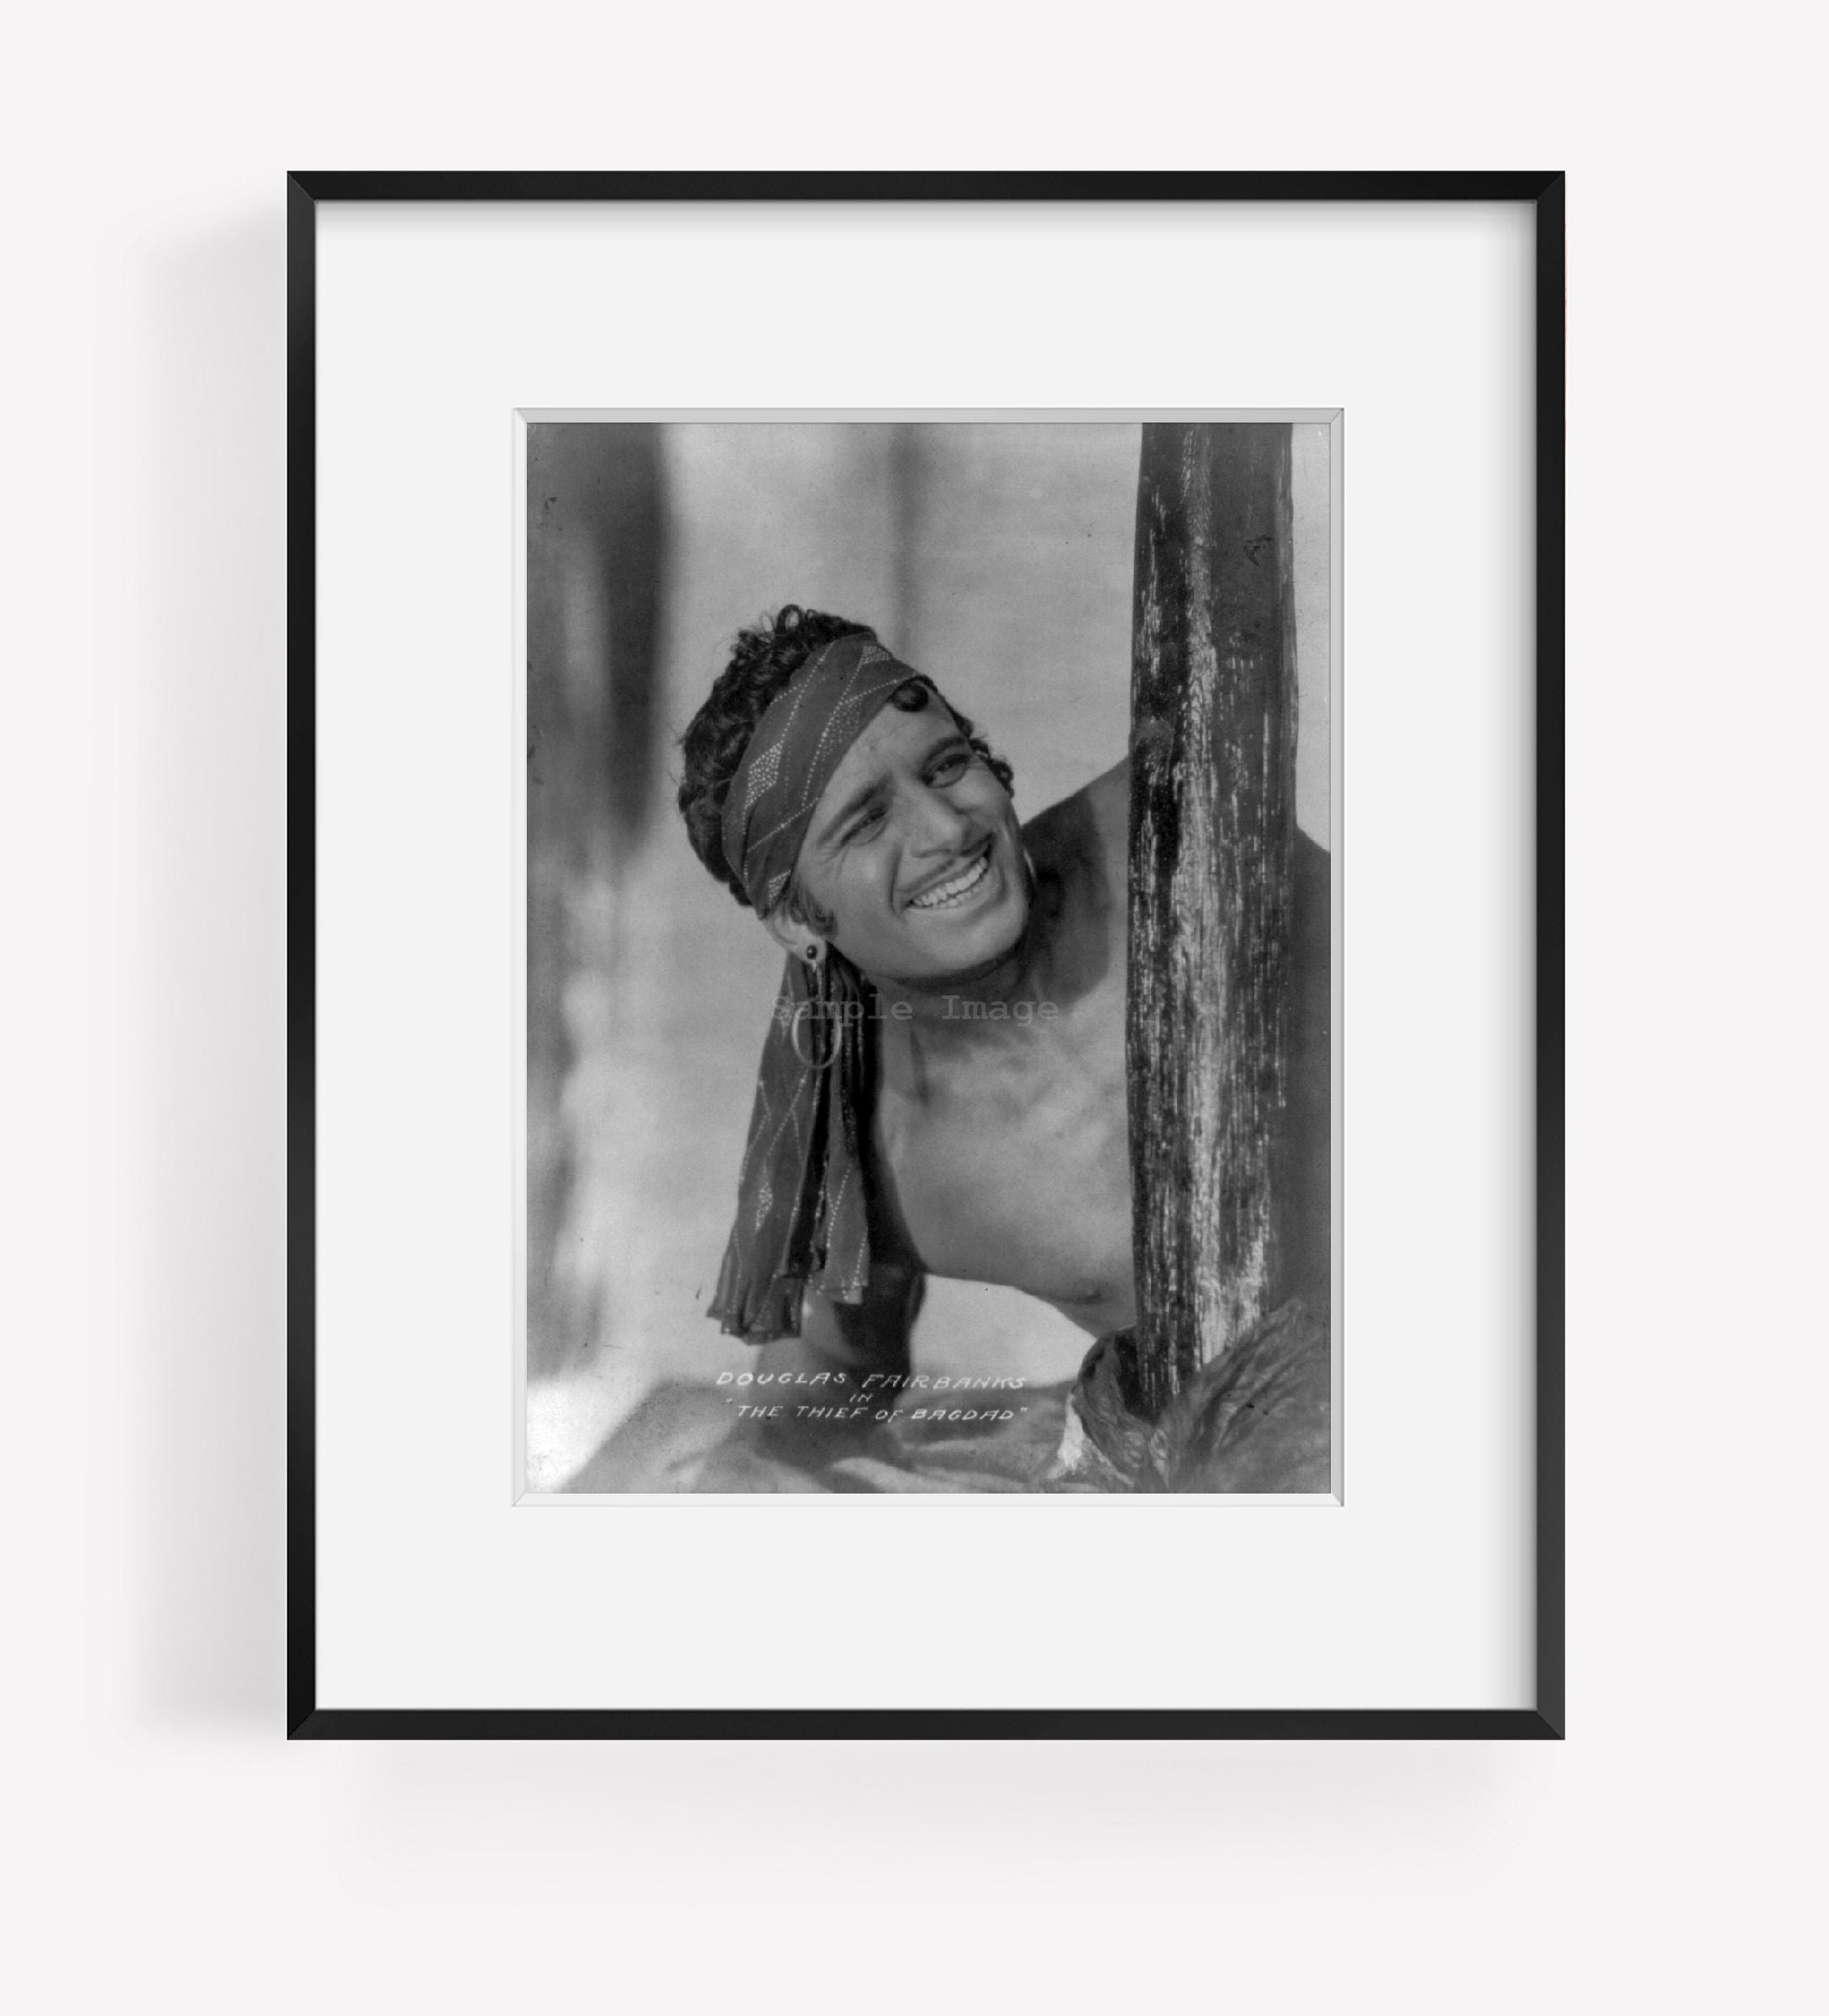 Photo: Douglas Fairbanks, 1883-1939, American actor, director